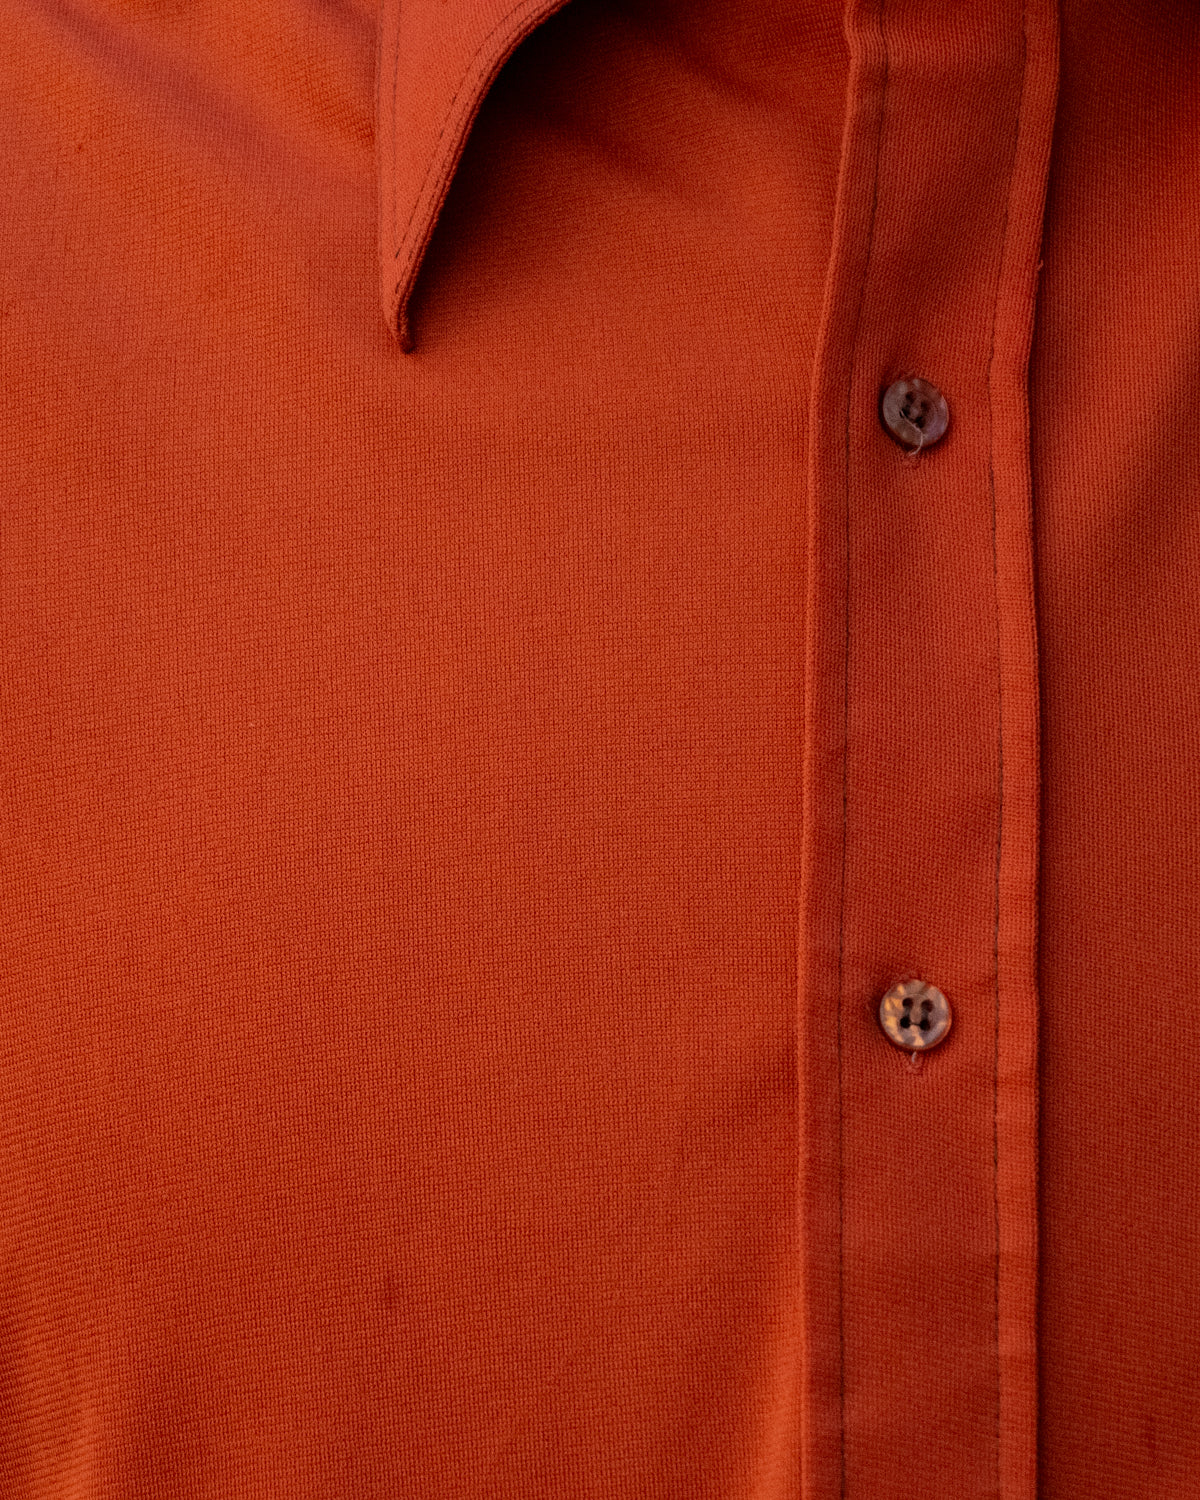 70s Orange Collared Shirt